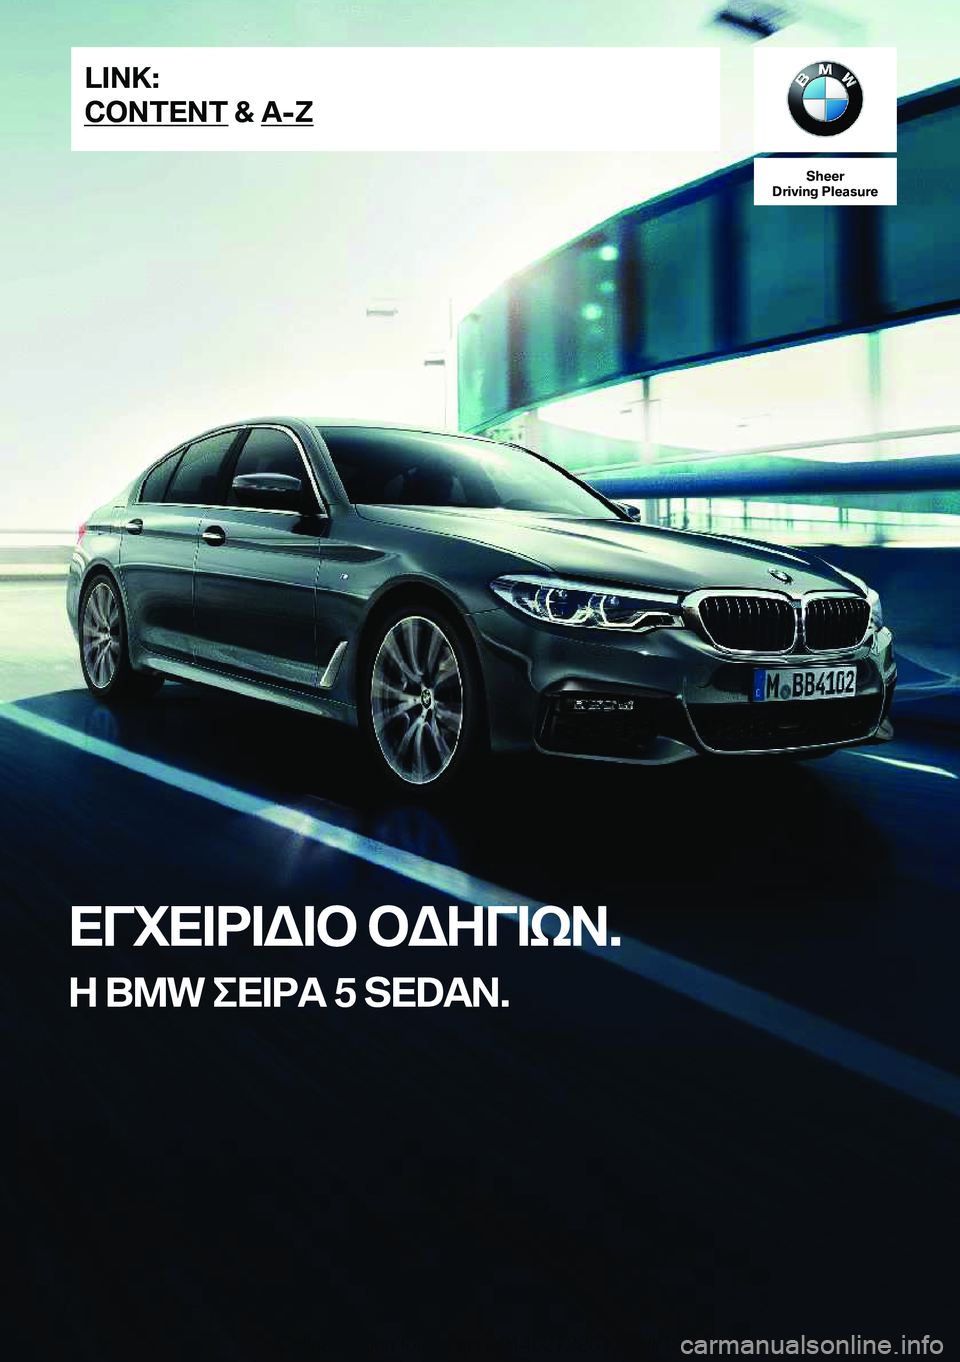 BMW 5 SERIES 2019  ΟΔΗΓΌΣ ΧΡΉΣΗΣ (in Greek) �S�h�e�e�r
�D�r�i�v�i�n�g��P�l�e�a�s�u�r�e
XViX=d=W=b�bWZV=kA�.
Z��B�M�W�eX=dT��5��S�E�D�A�N�.�L�I�N�K�:
�C�O�N�T�E�N�T��&��A�-�Z�O�n�l�i�n�e��E�d�i�t�i�o�n��f�o�r��P